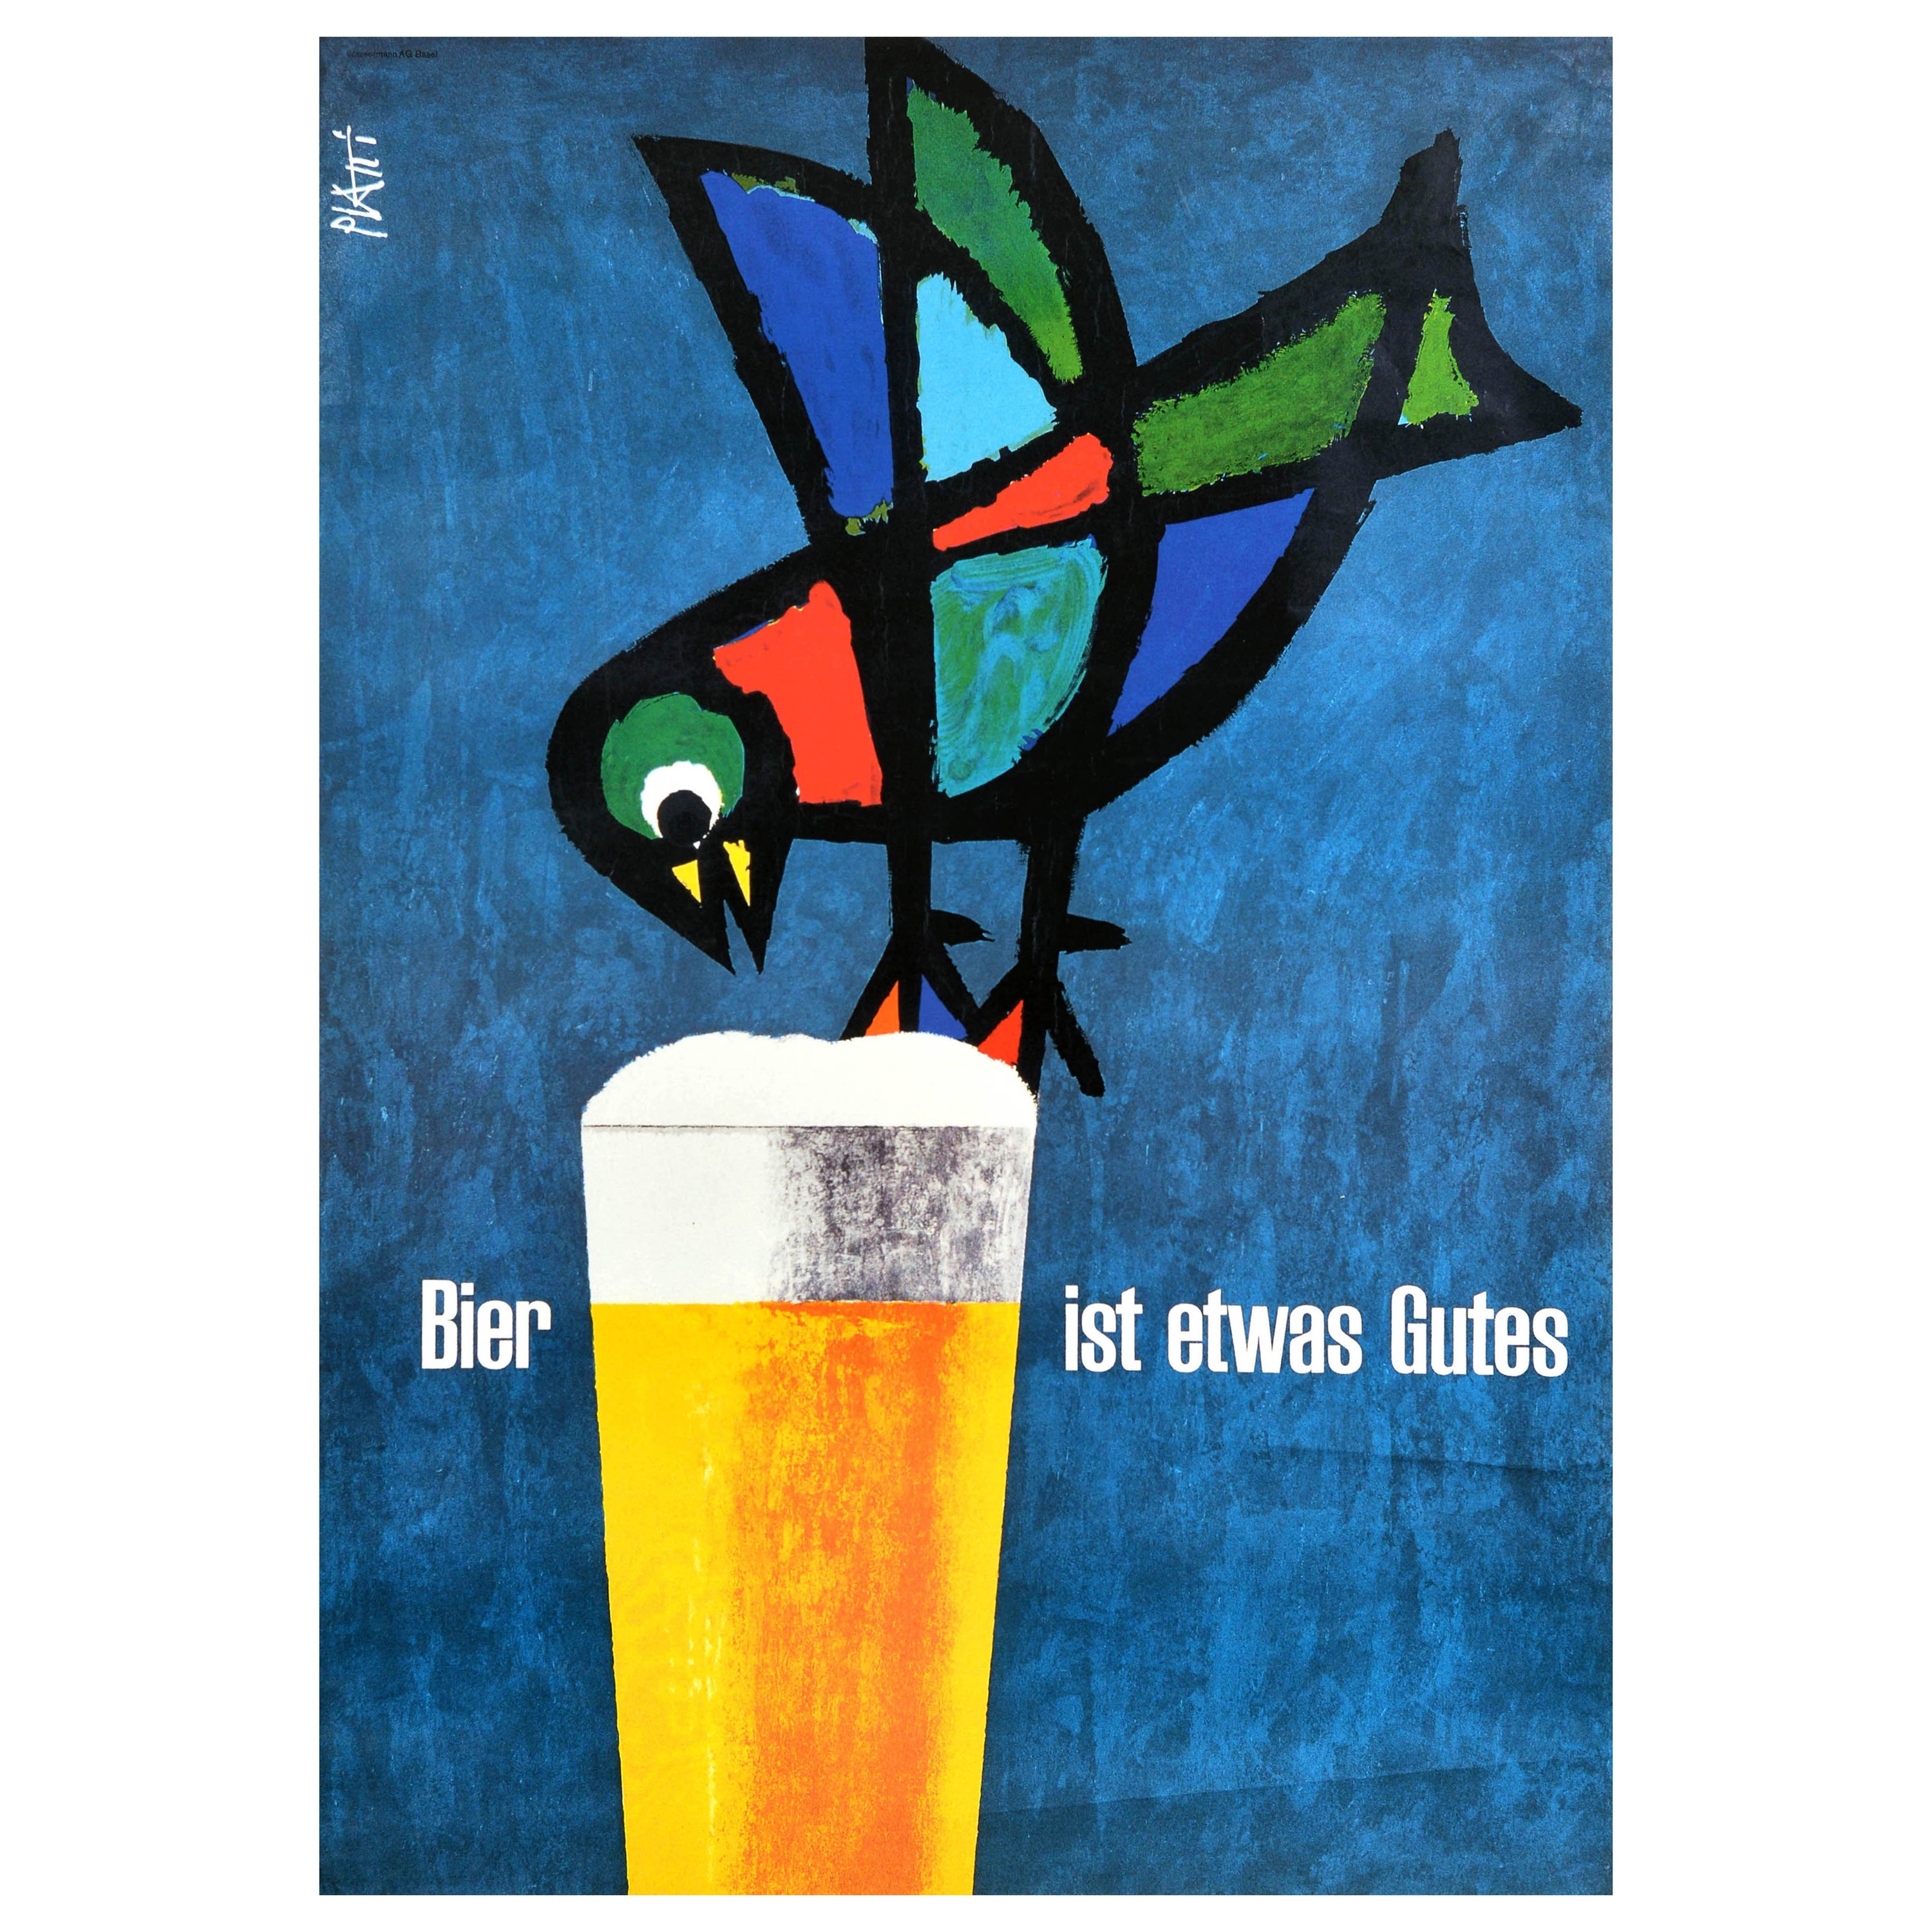 Original Vintage Drink Advertising Poster Beer Is A Good Thing Bird Piatti Bier For Sale